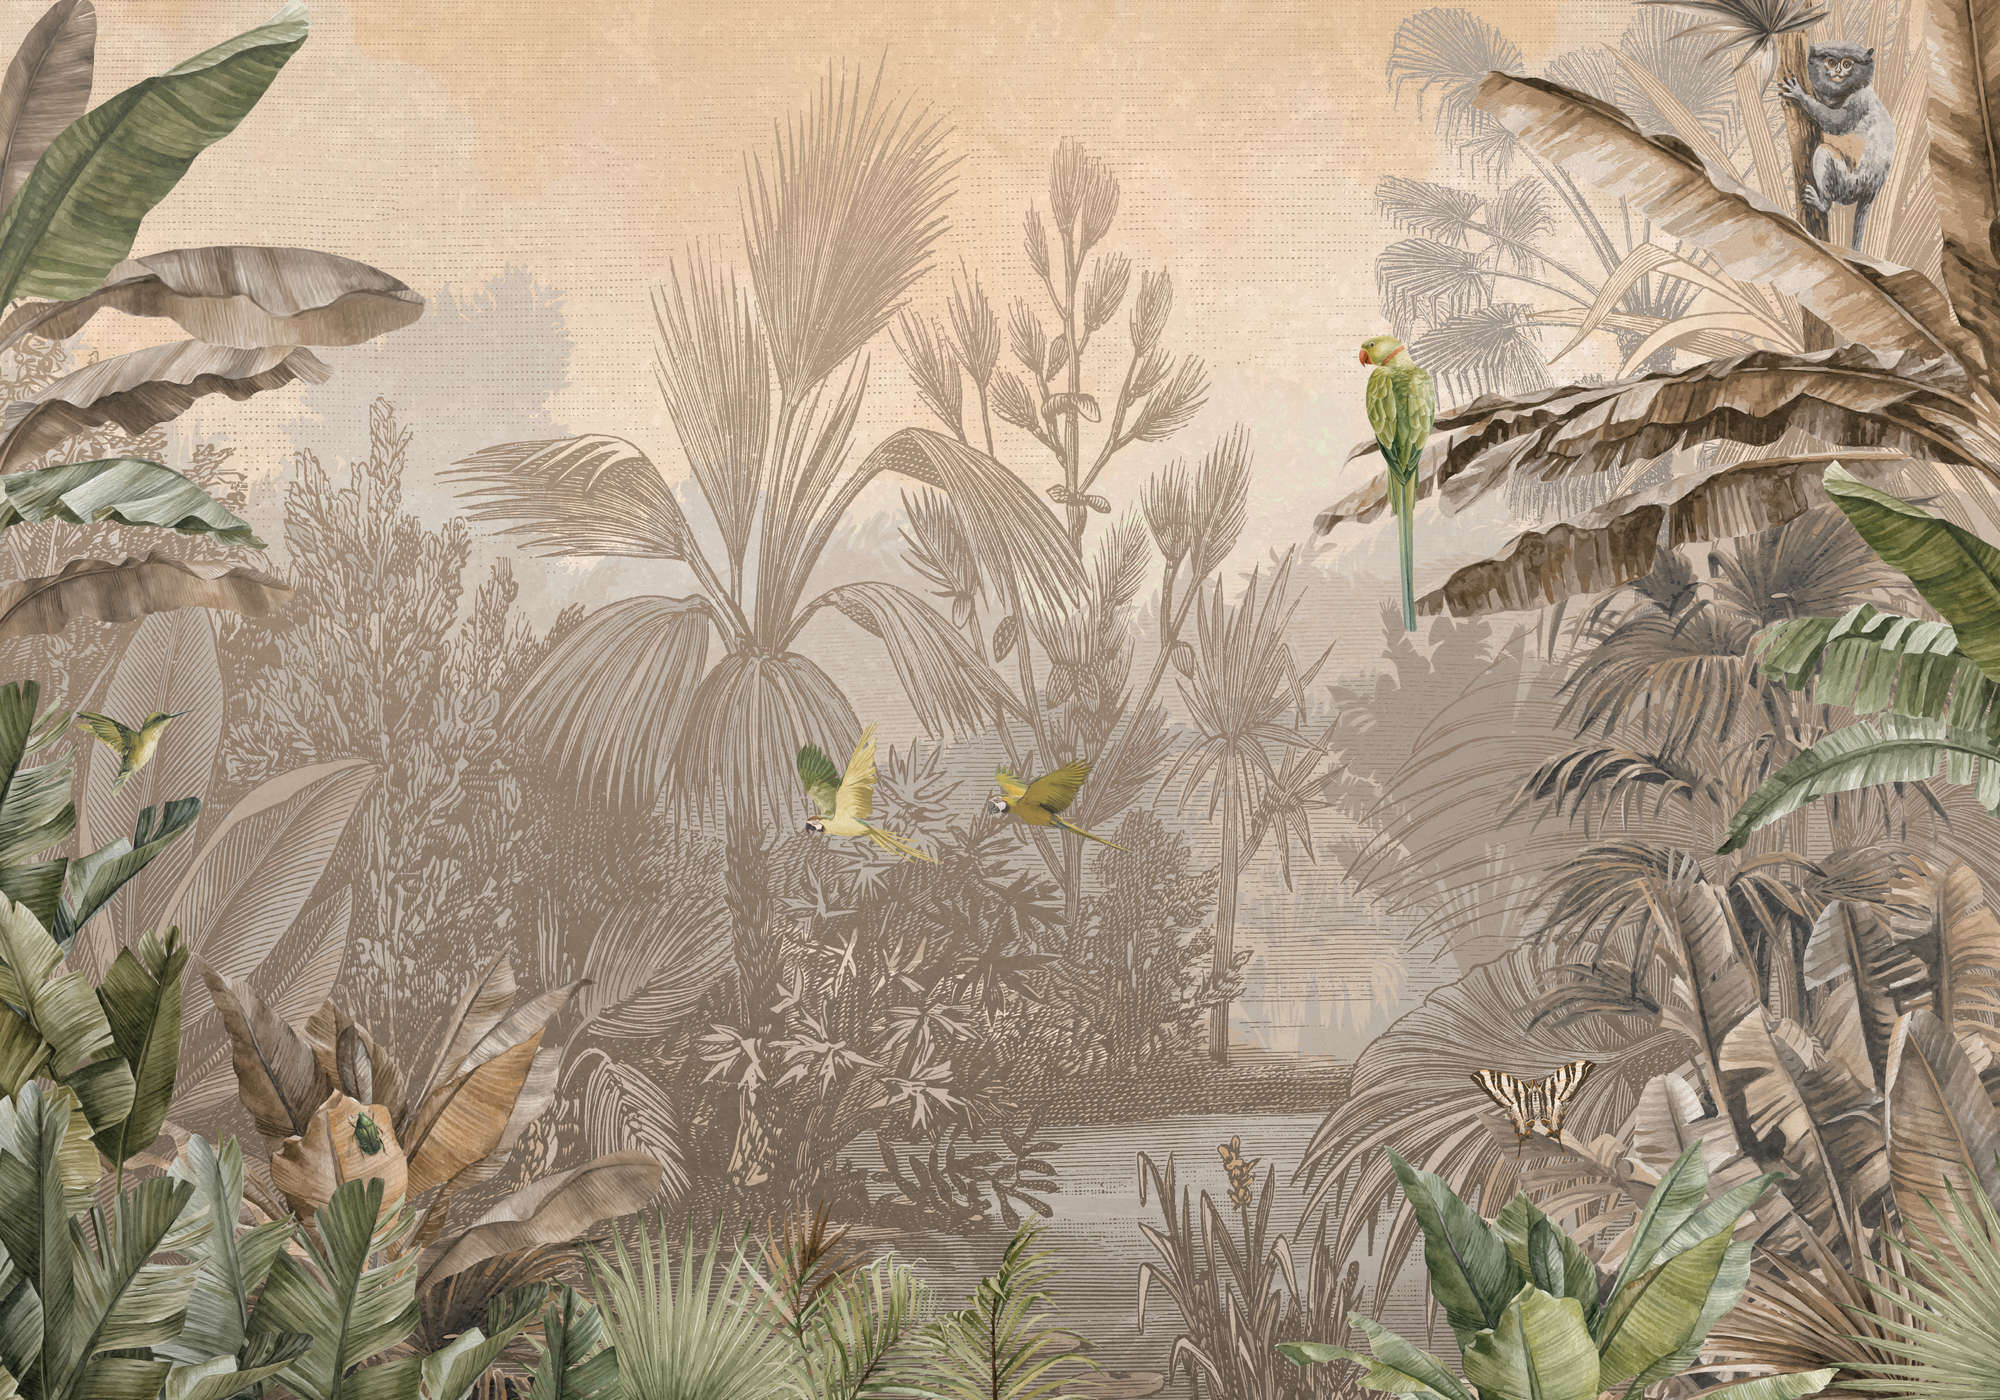             Mural de la selva marrón-verde en estilo de dibujo
        